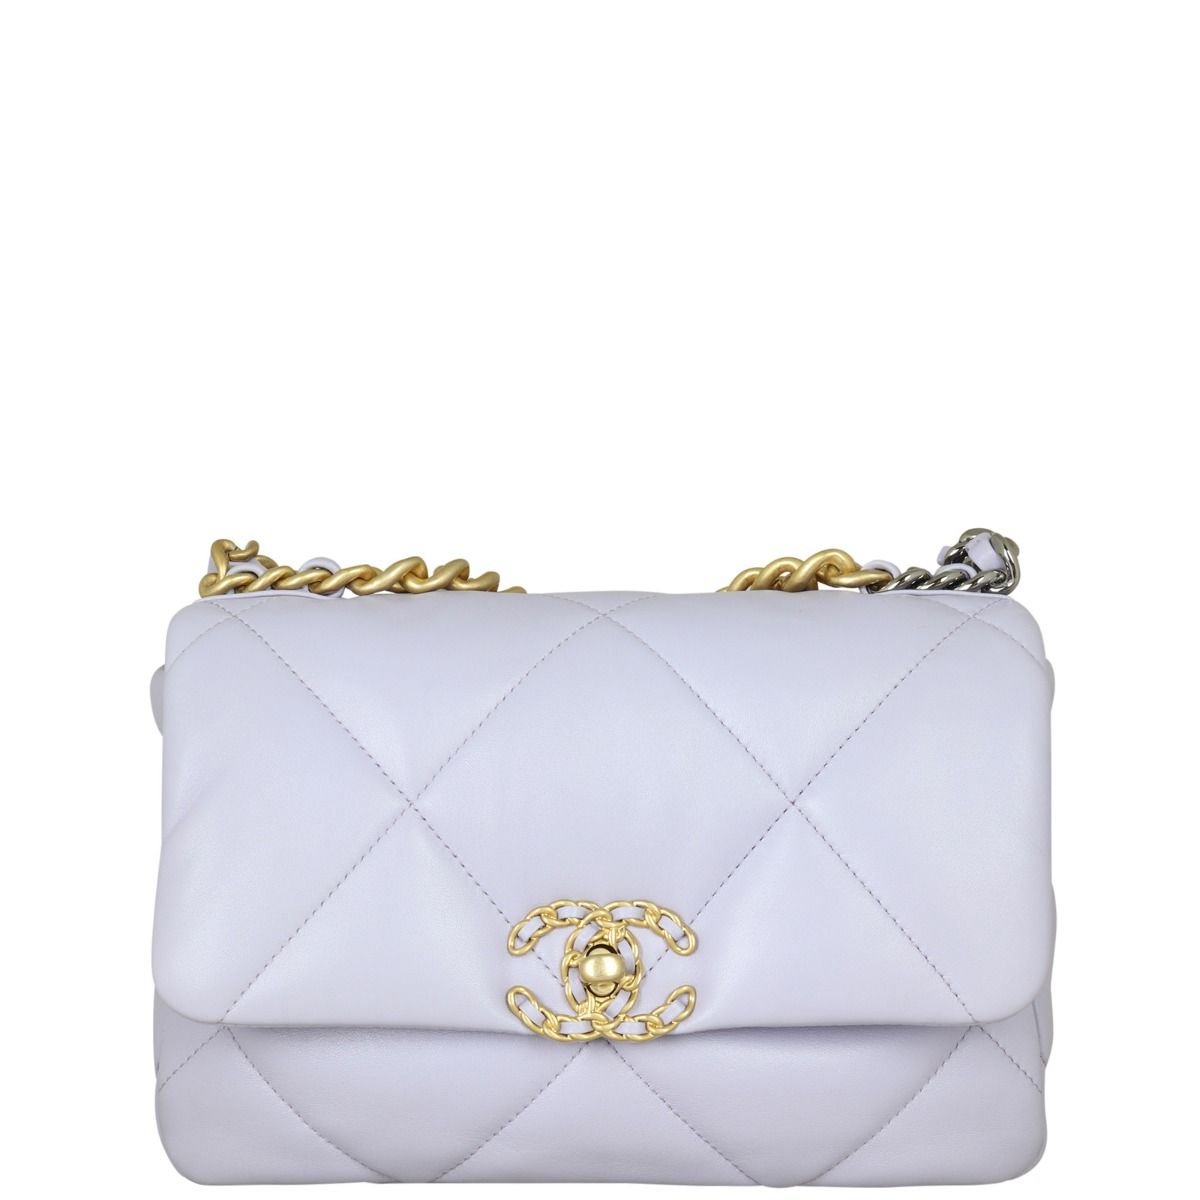 Handbag Review Medium Chanel 19  The Teacher Diva a Dallas Fashion Blog  featuring Beauty  Lifestyle